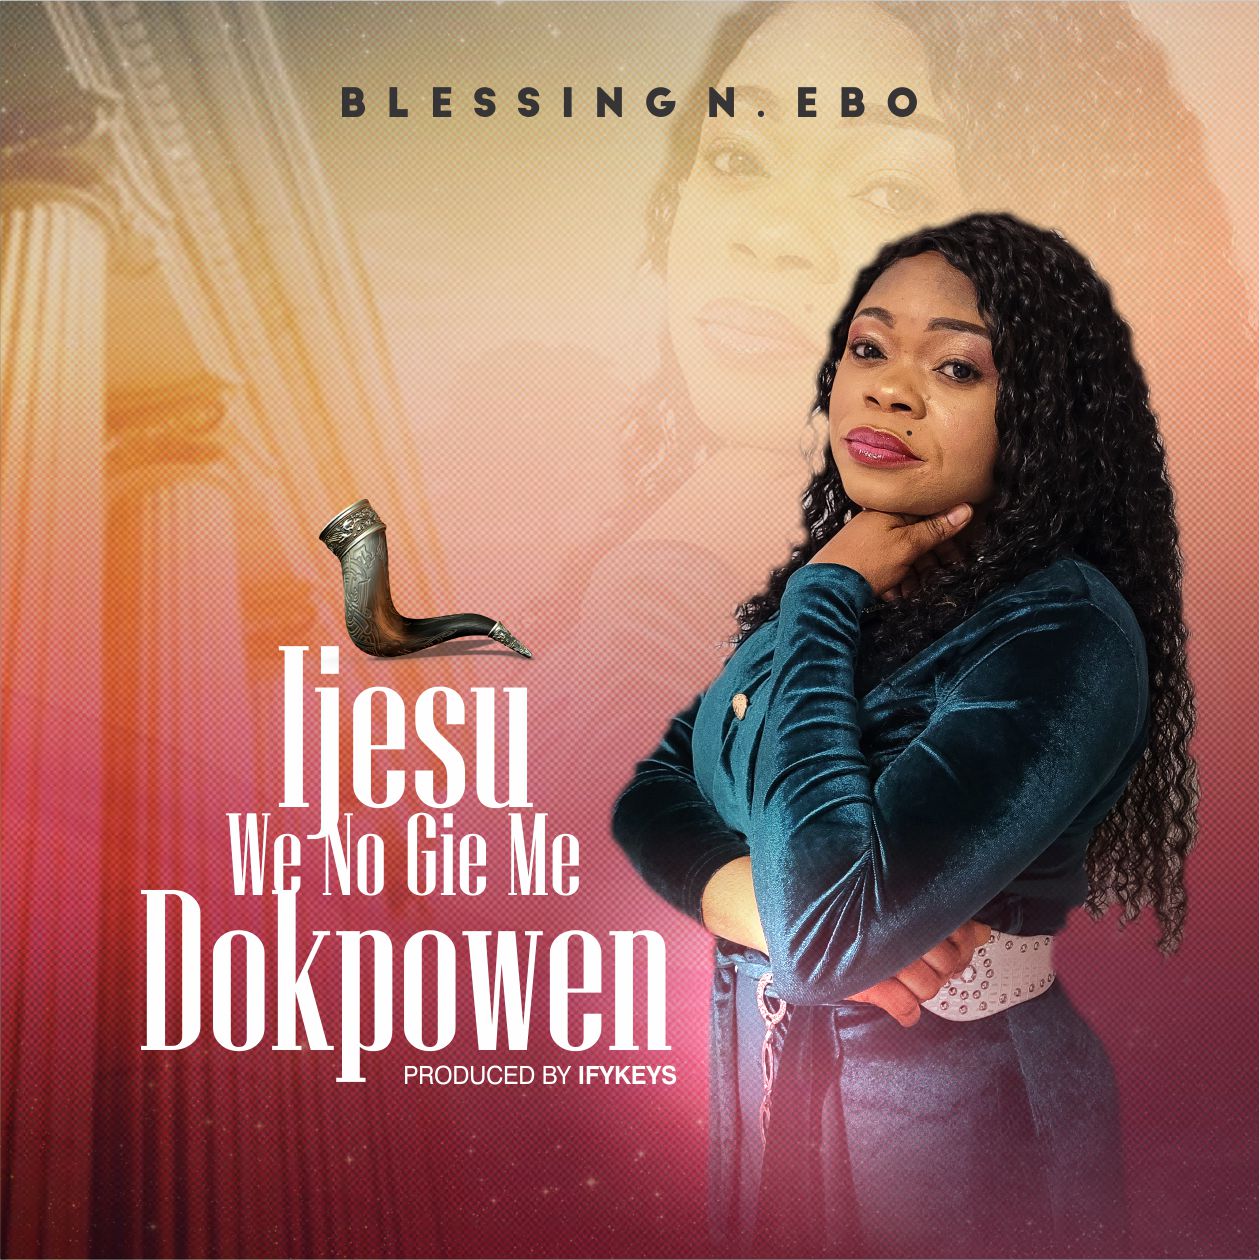 Download Mp3: Blessing N. Ebo - Ijesu We No Gie Me Dokpowen